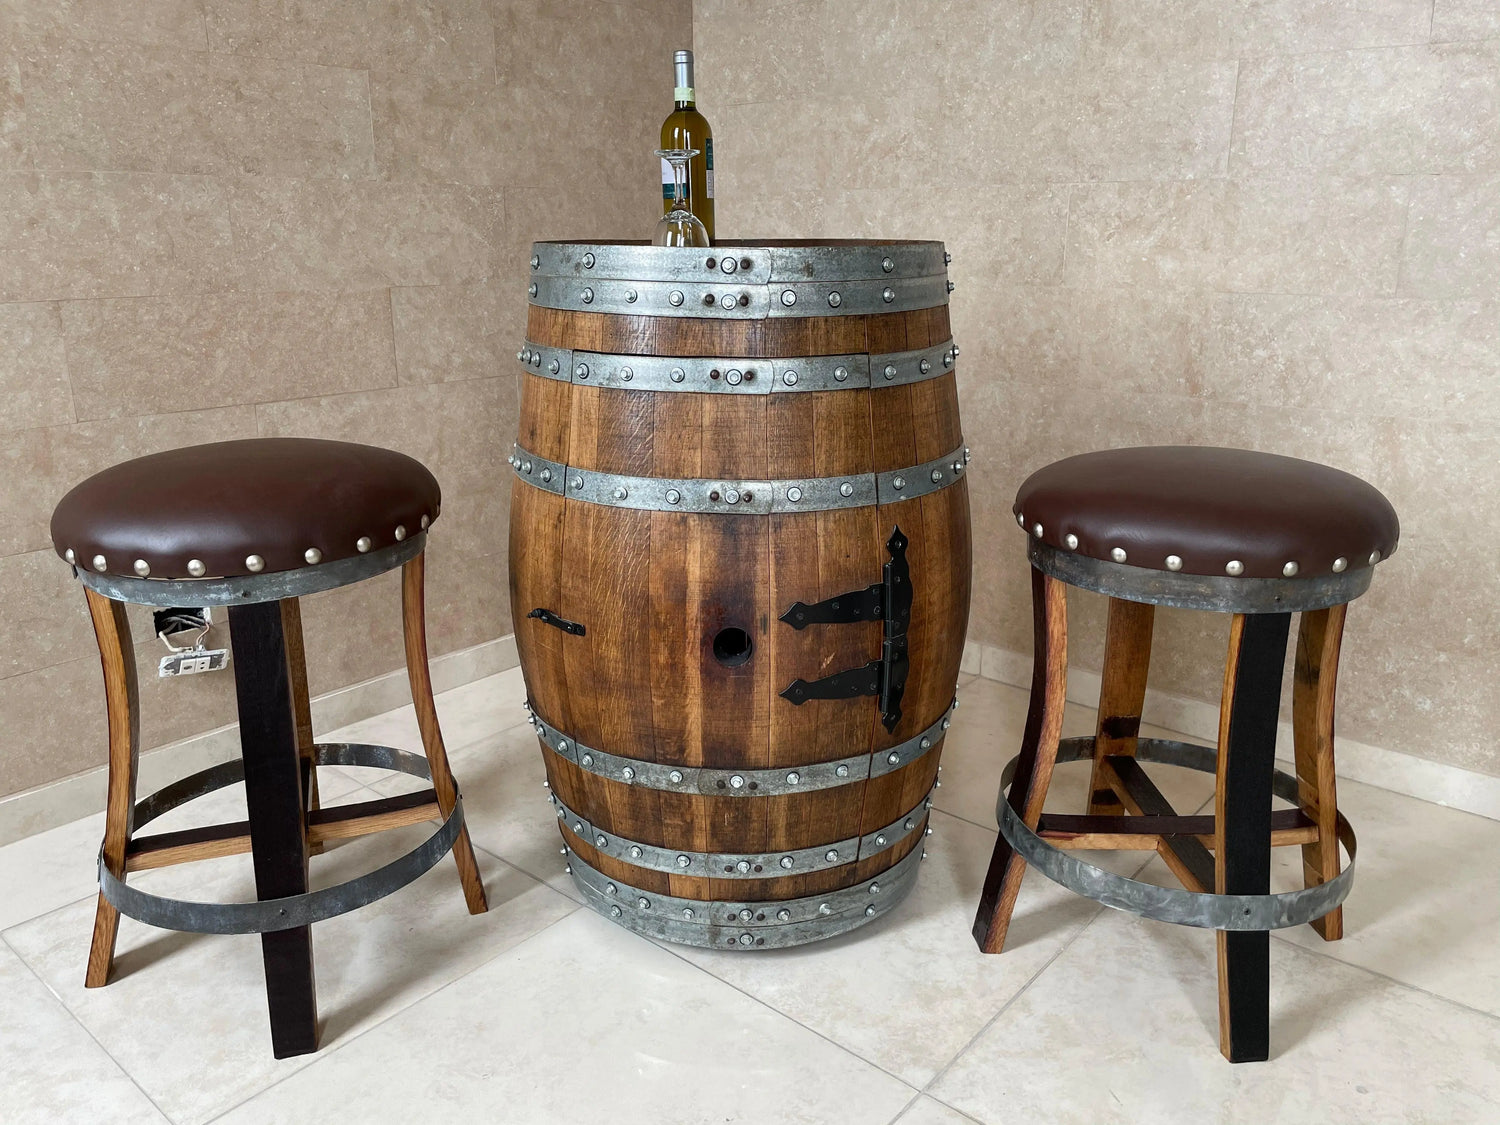 The Best Gift For A New Home: Wine Barrel Furniture - Oak Wood Wine Barrels